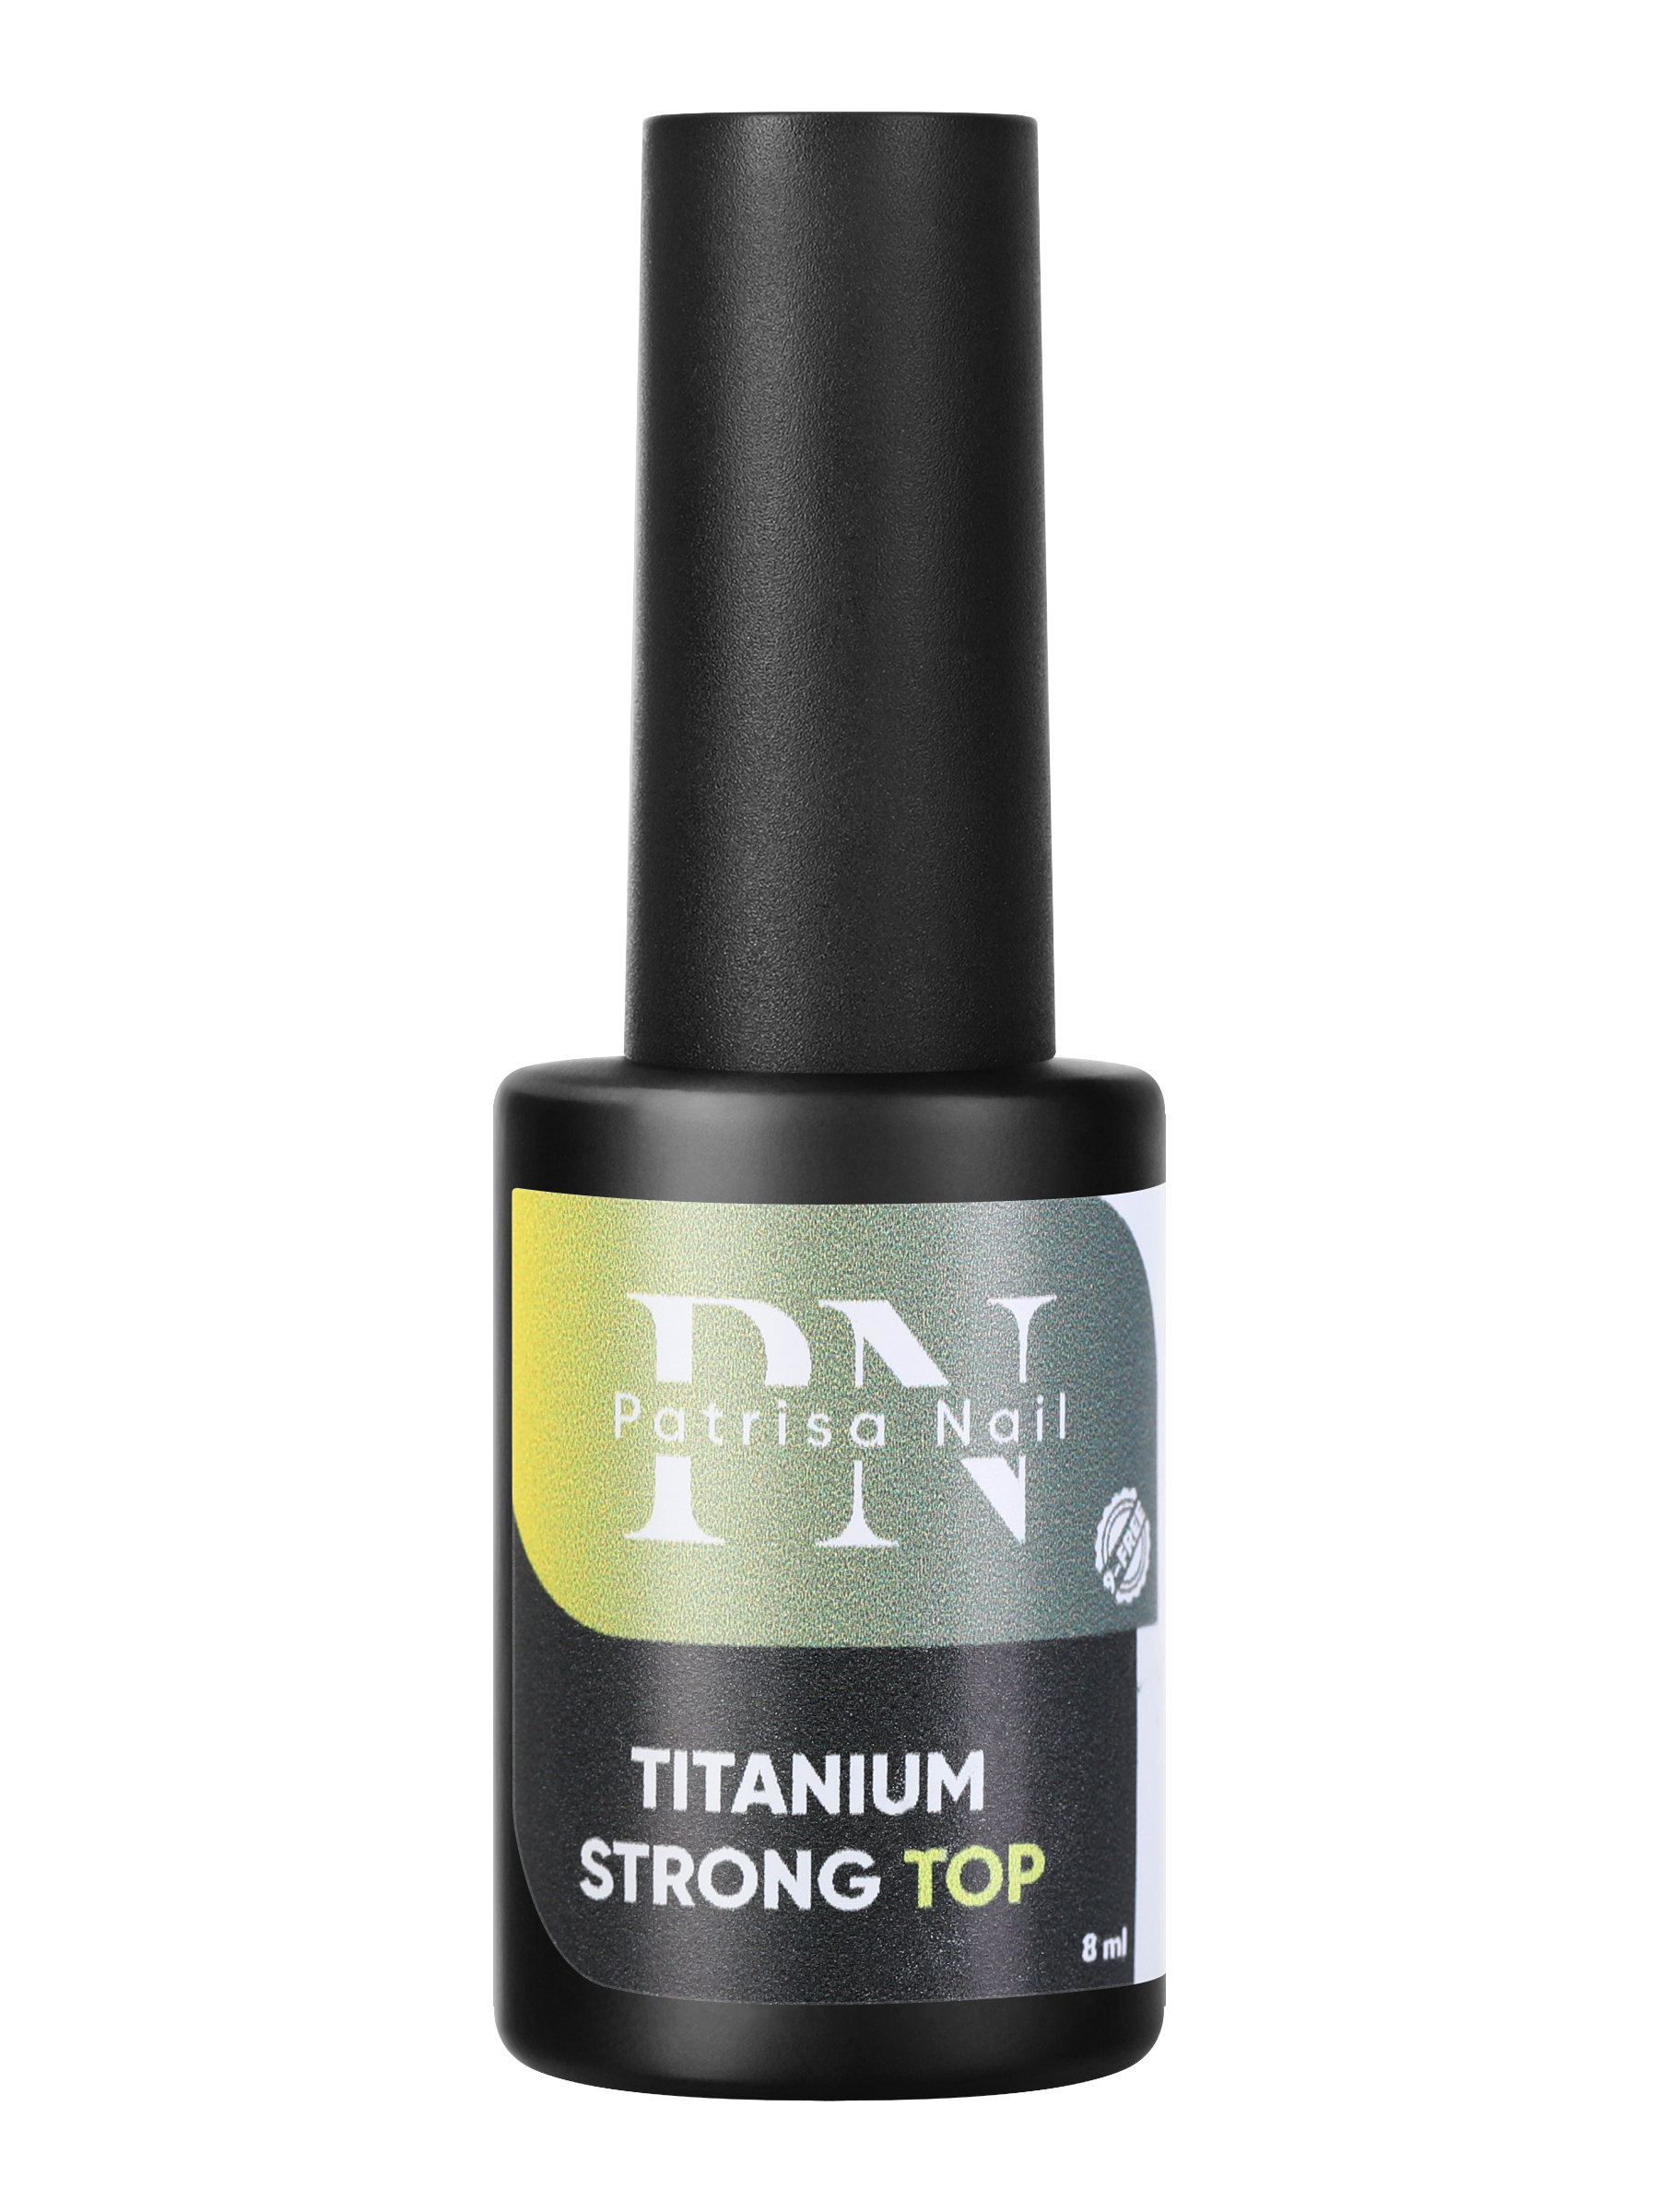 Топ для ногтей Patrisa Nail Titanium Strong Тоp без липкого слоя средней вязкости, 8 мл patrisa nail база средней вязкости titanium strong base